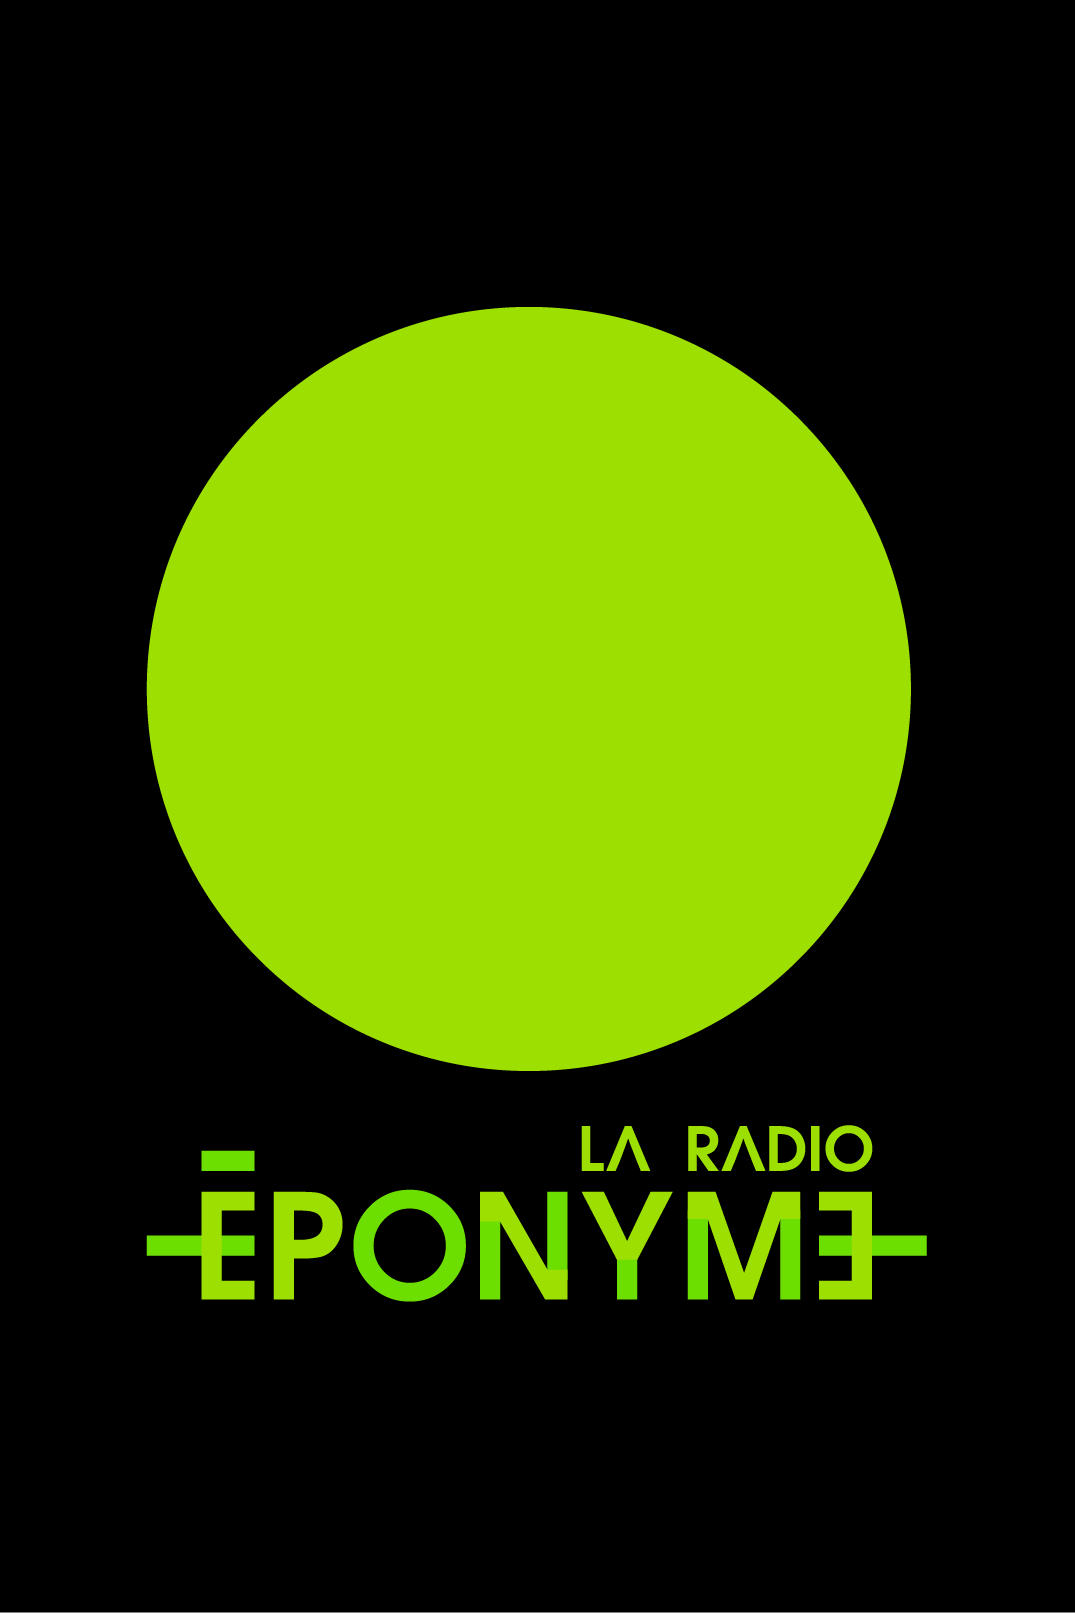 Radio Eponyme